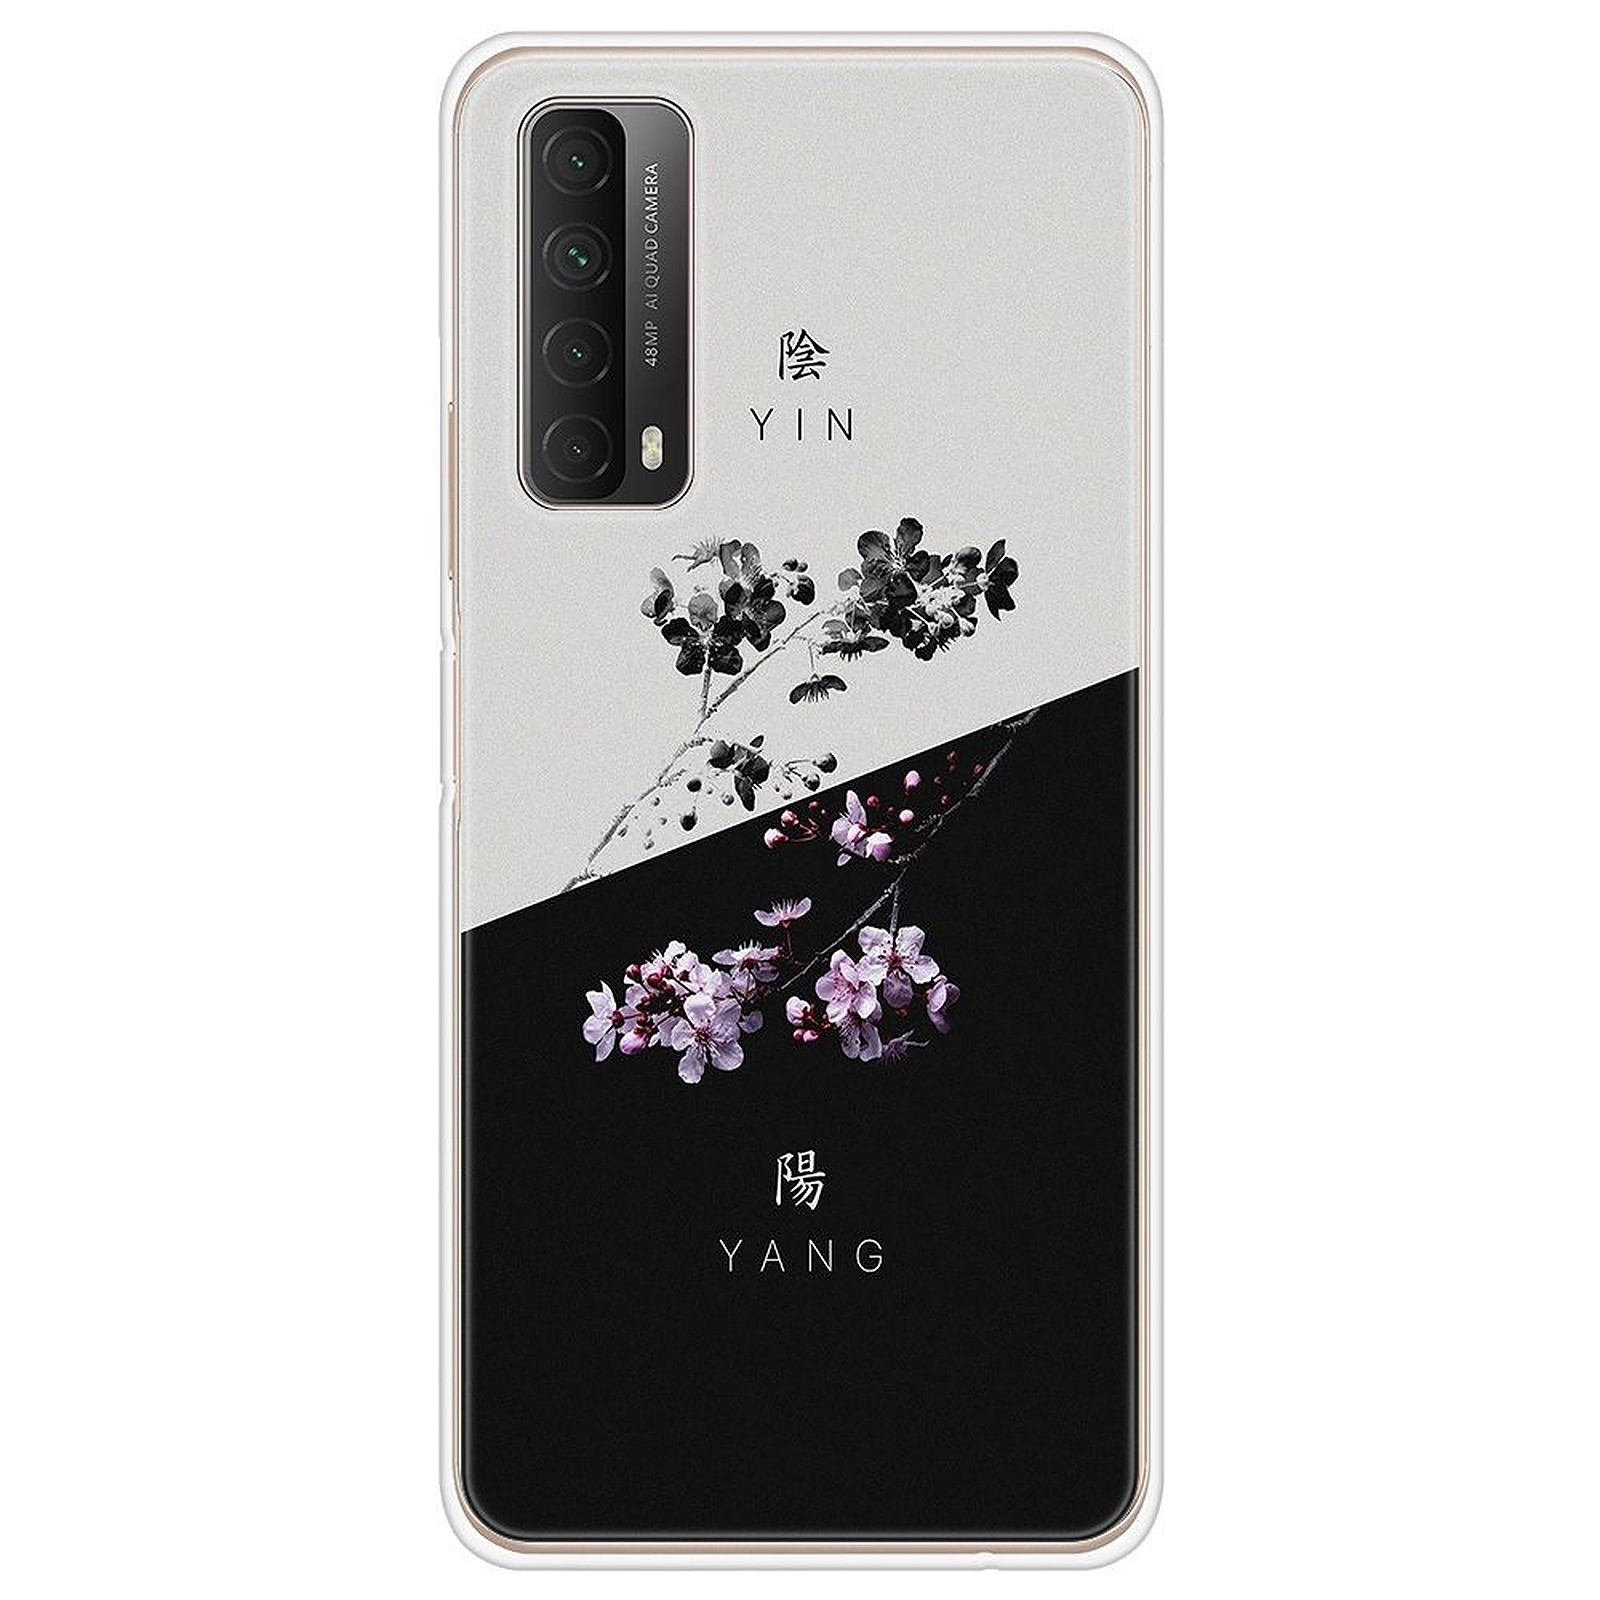 1001 Coques Coque silicone gel Huawei P Smart 2021 motif Yin et Yang - Coque telephone 1001Coques